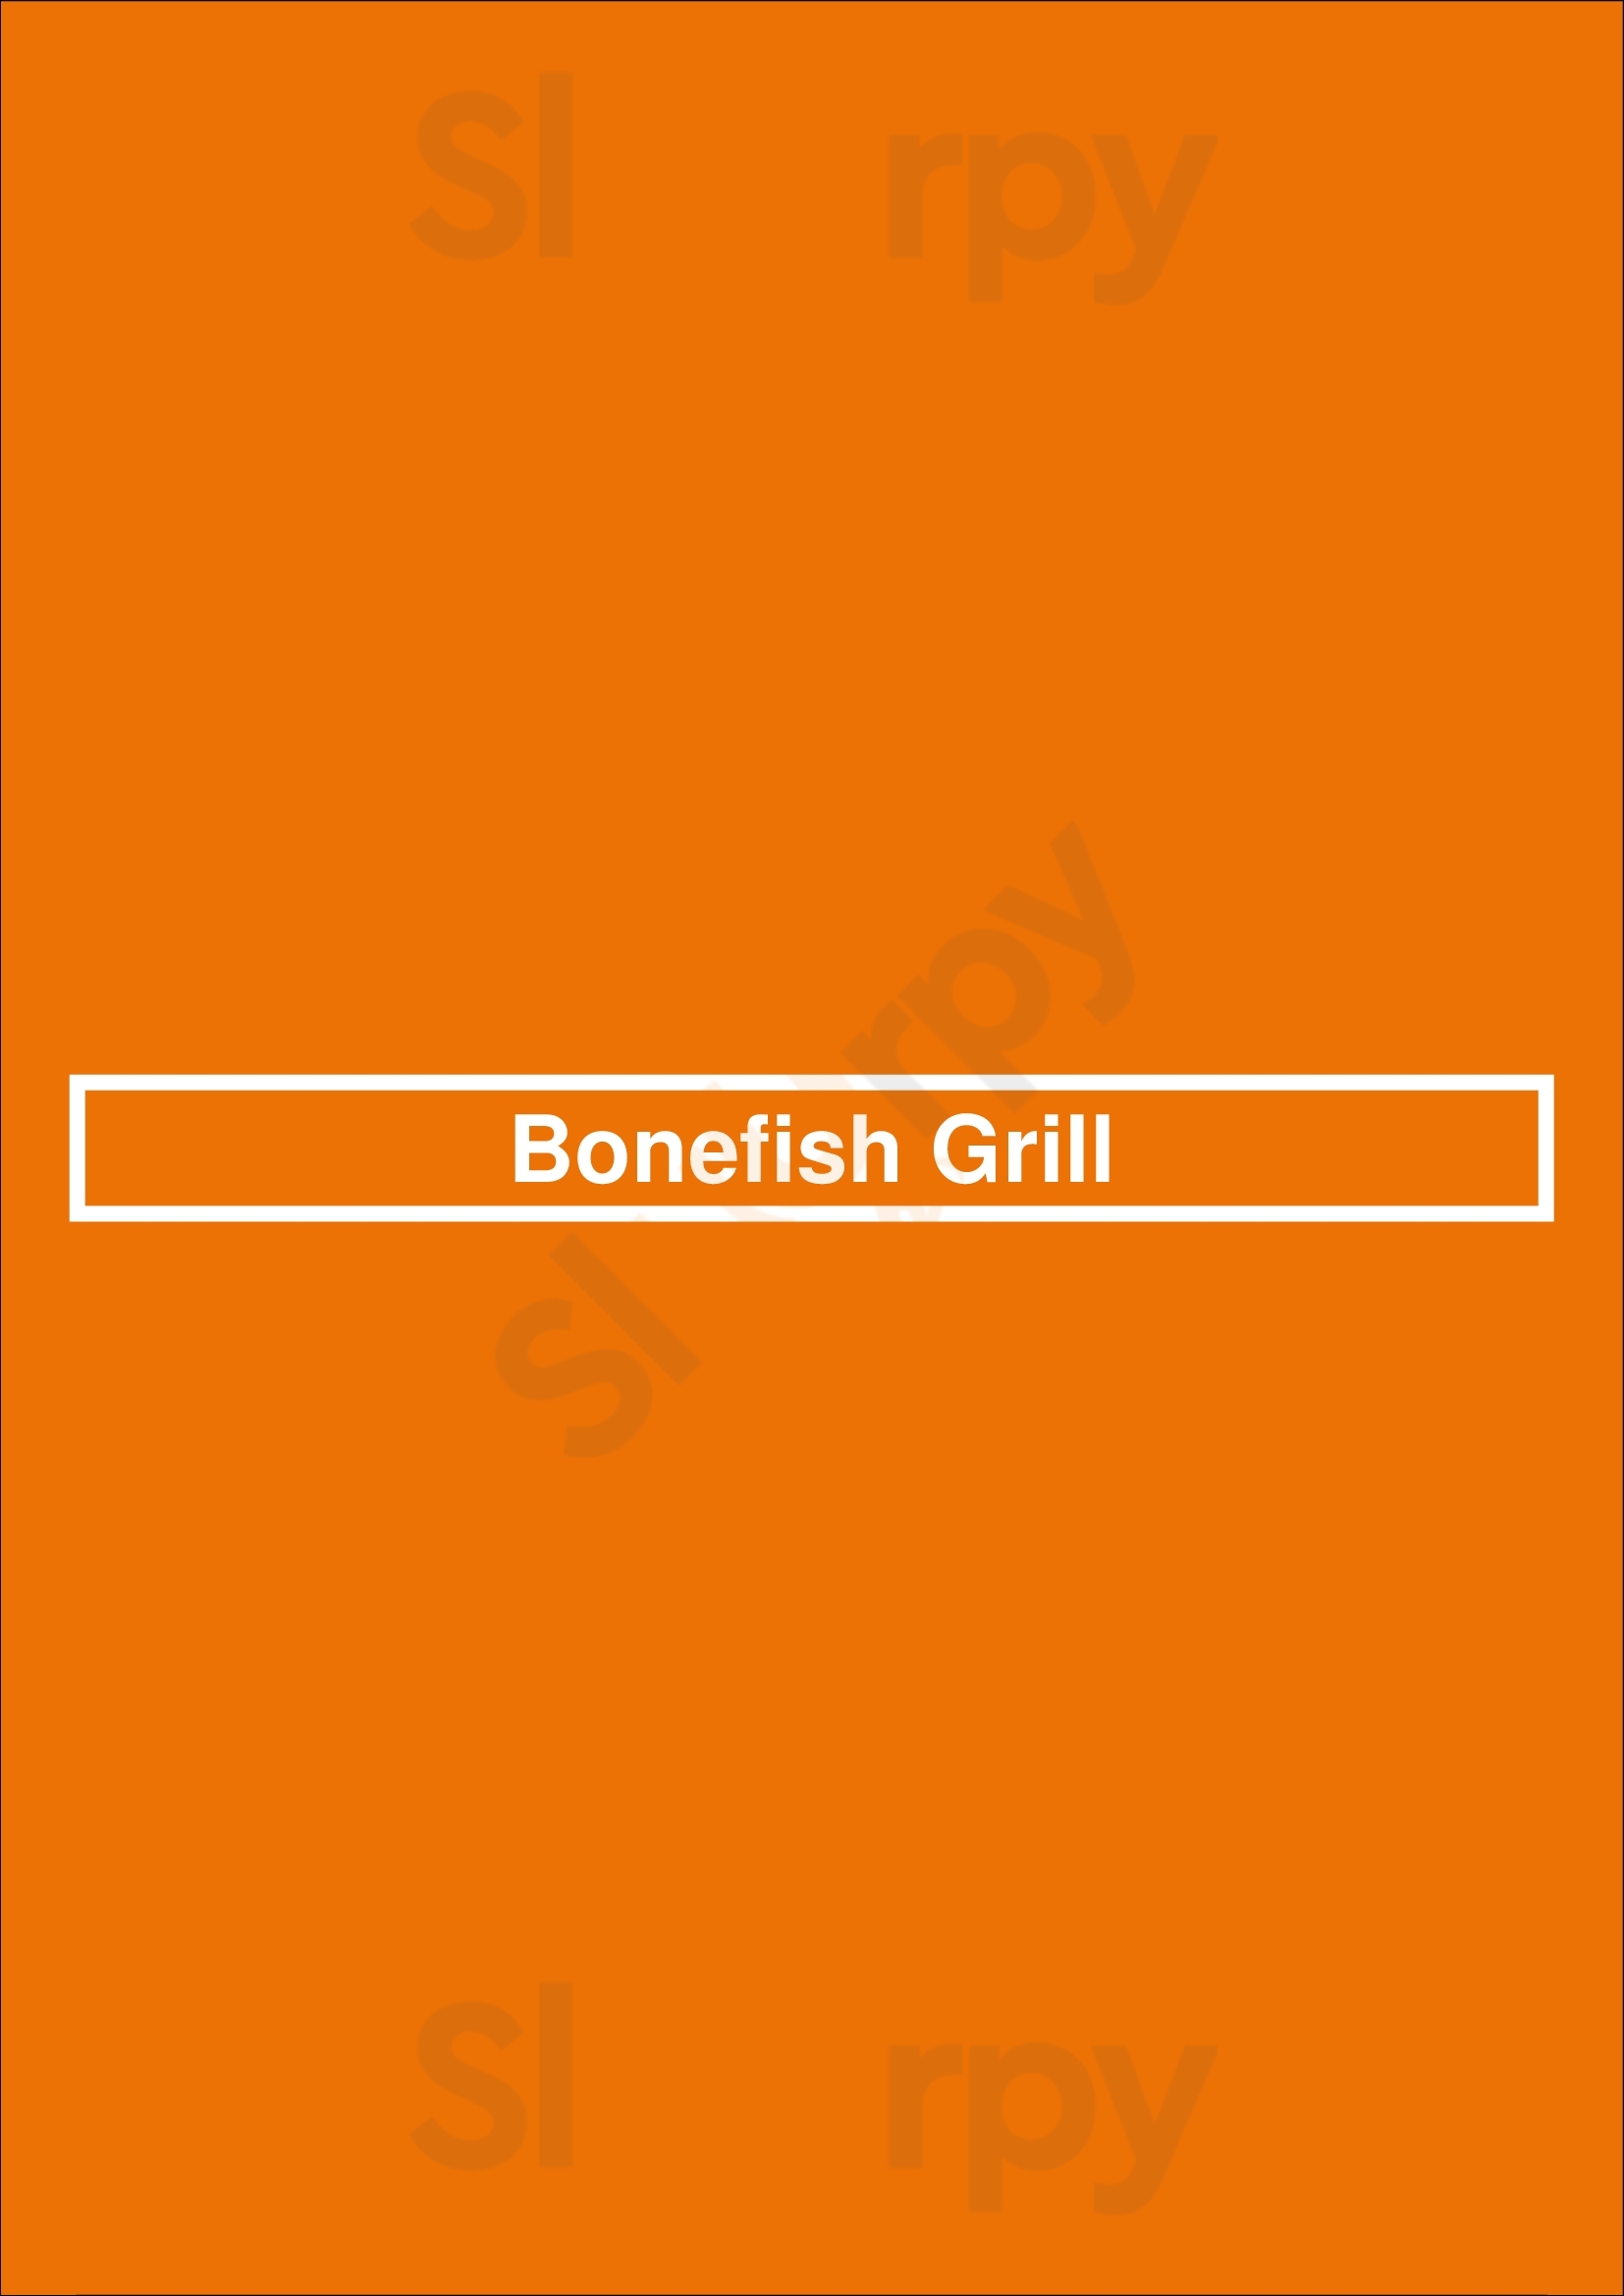 Bonefish Grill Camp Hill Menu - 1